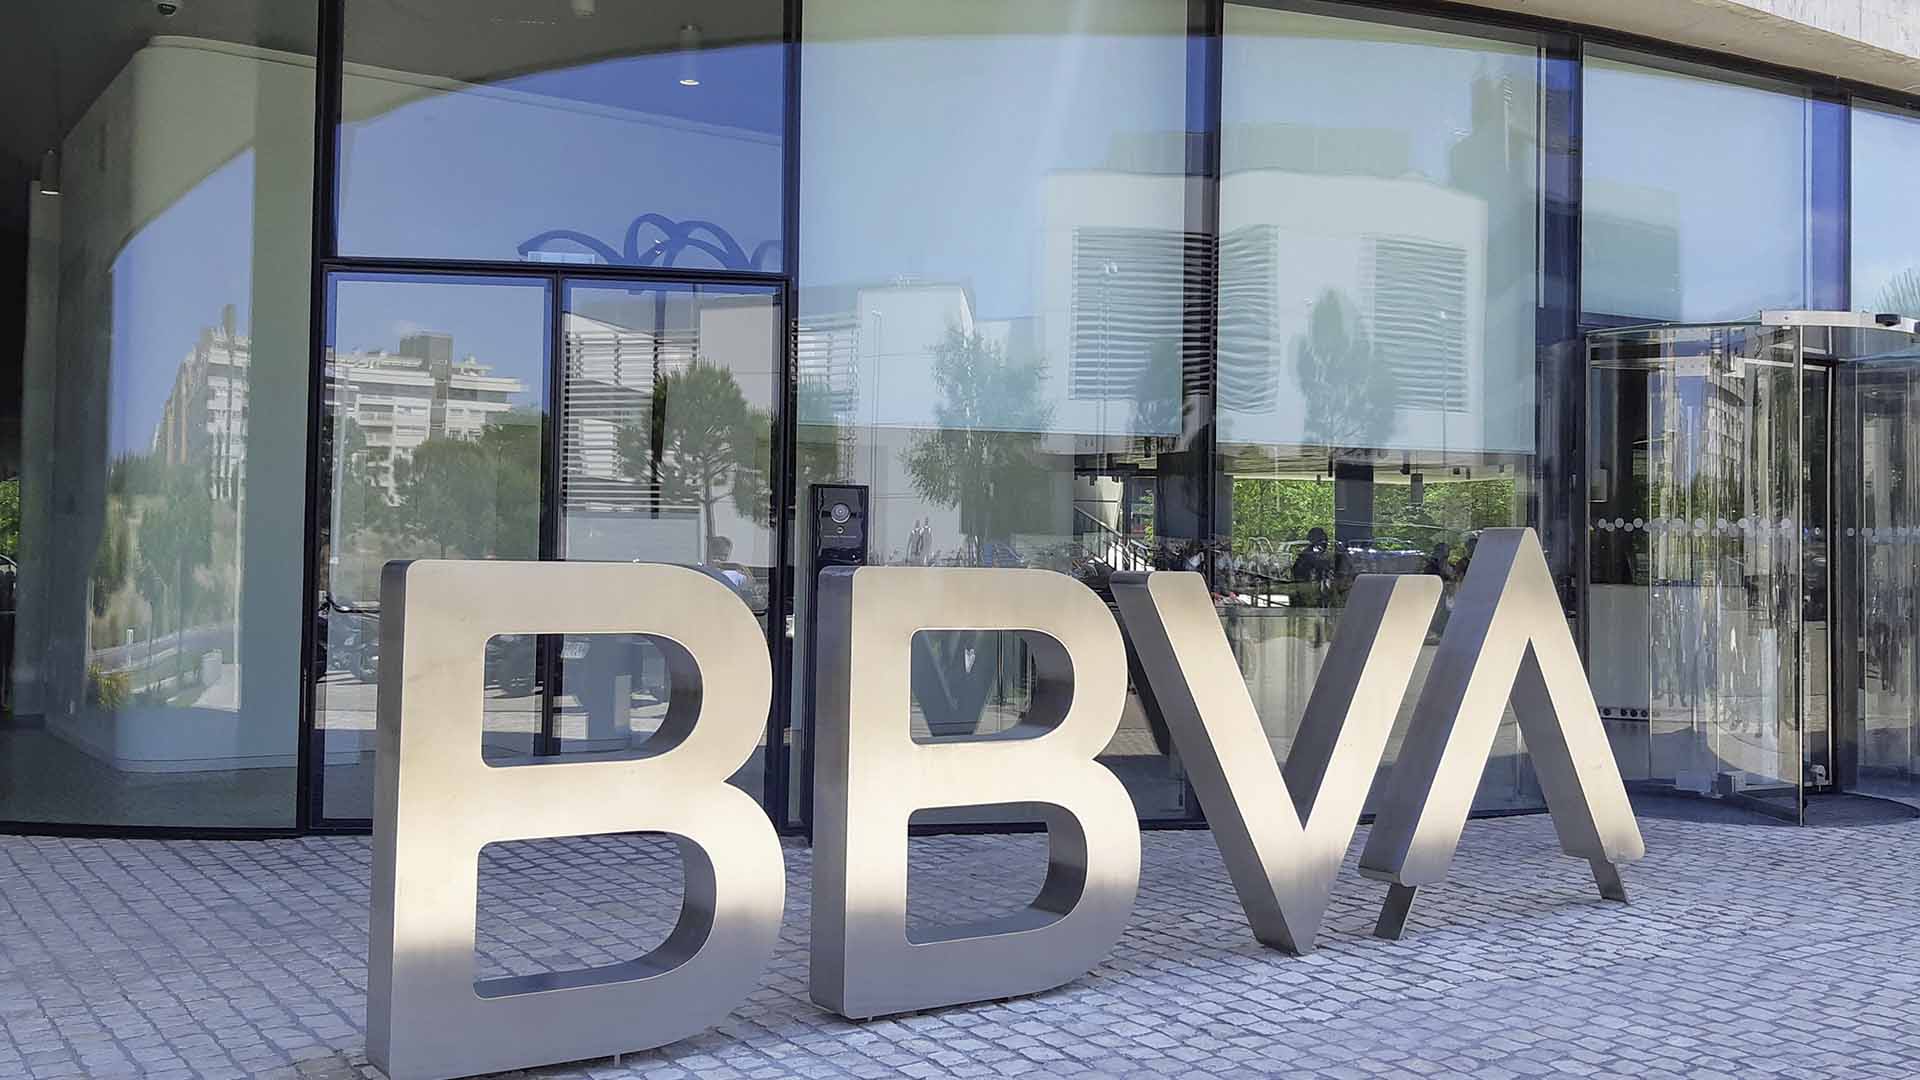 BBVA profit ex items reaches €4.83 billion in 2019 - the highest in 10 years